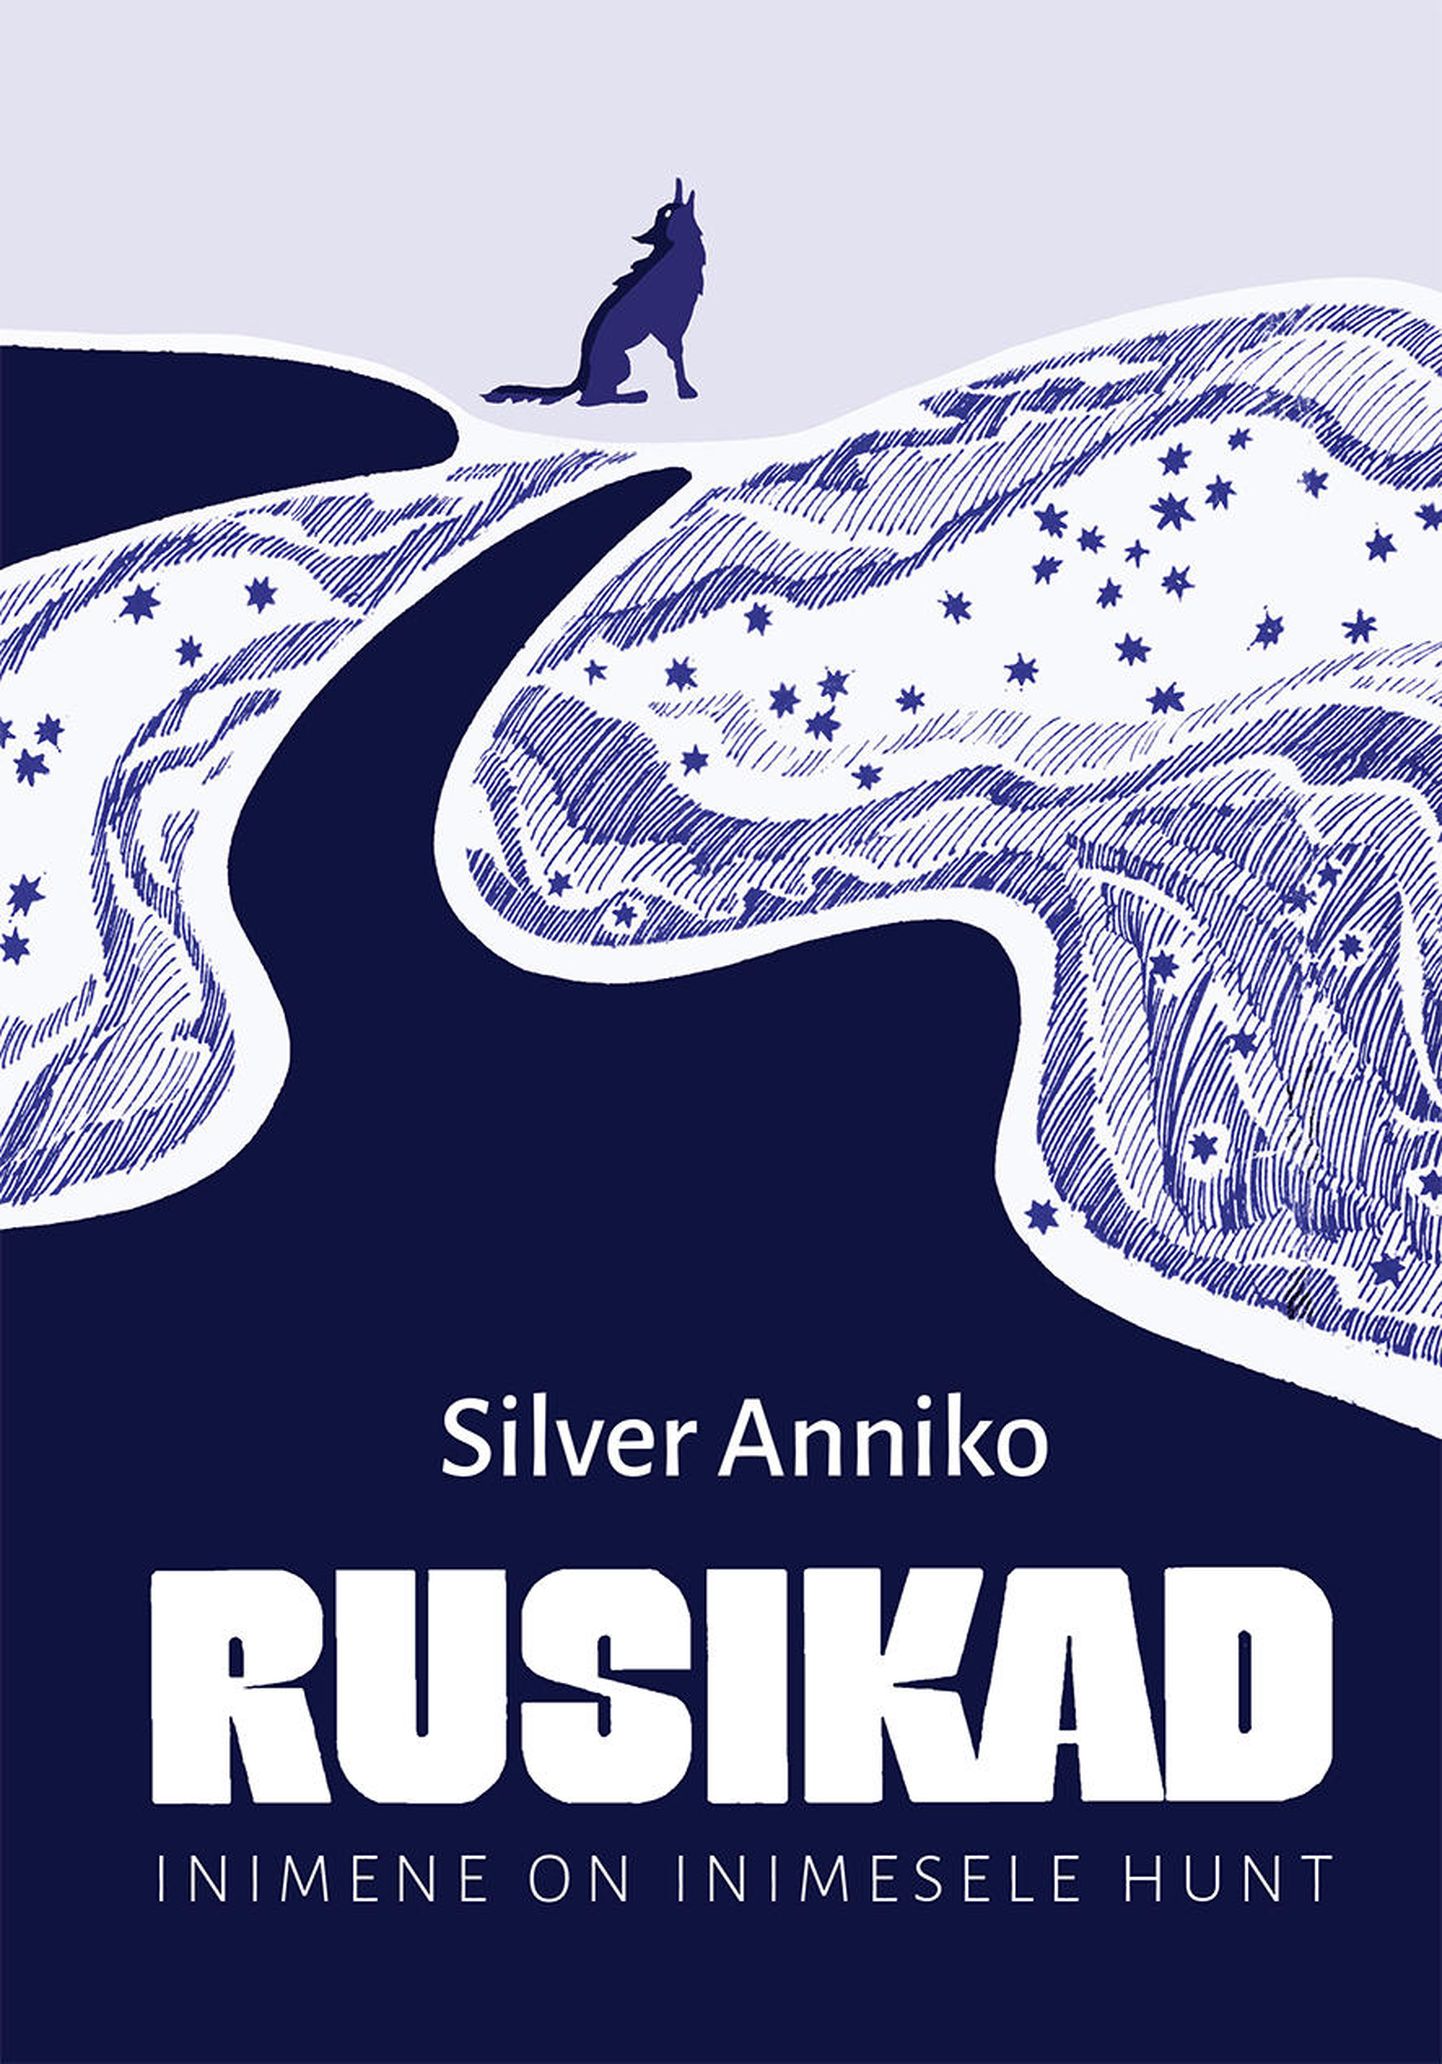 Silver Anniko kultusromaani «Rusikad» kärpimata versioon.